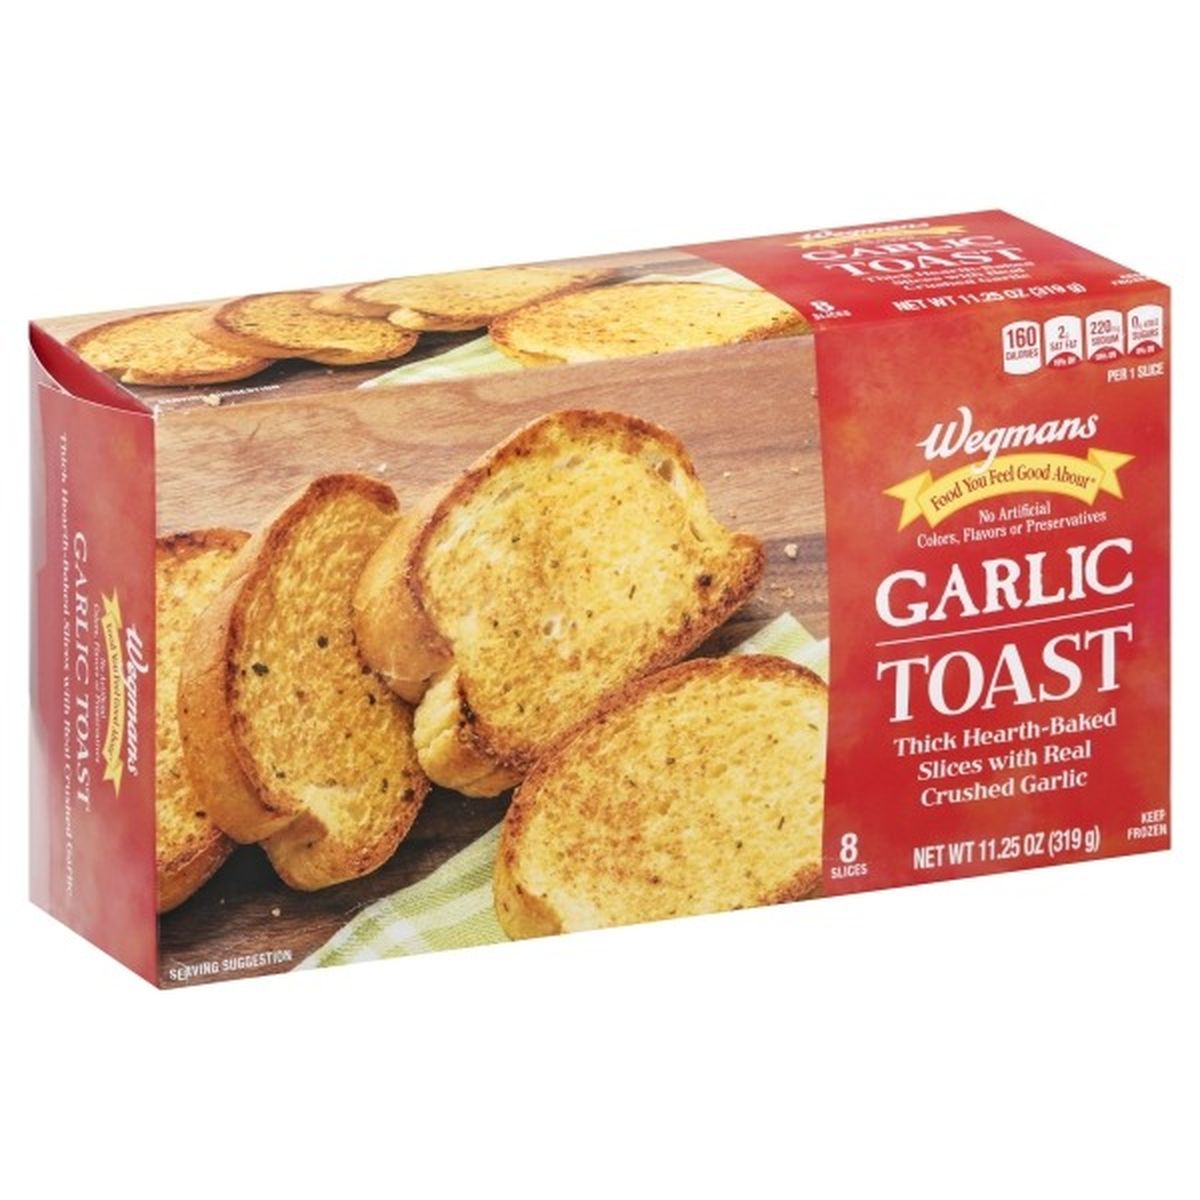 Calories in Wegmans Garlic Toast